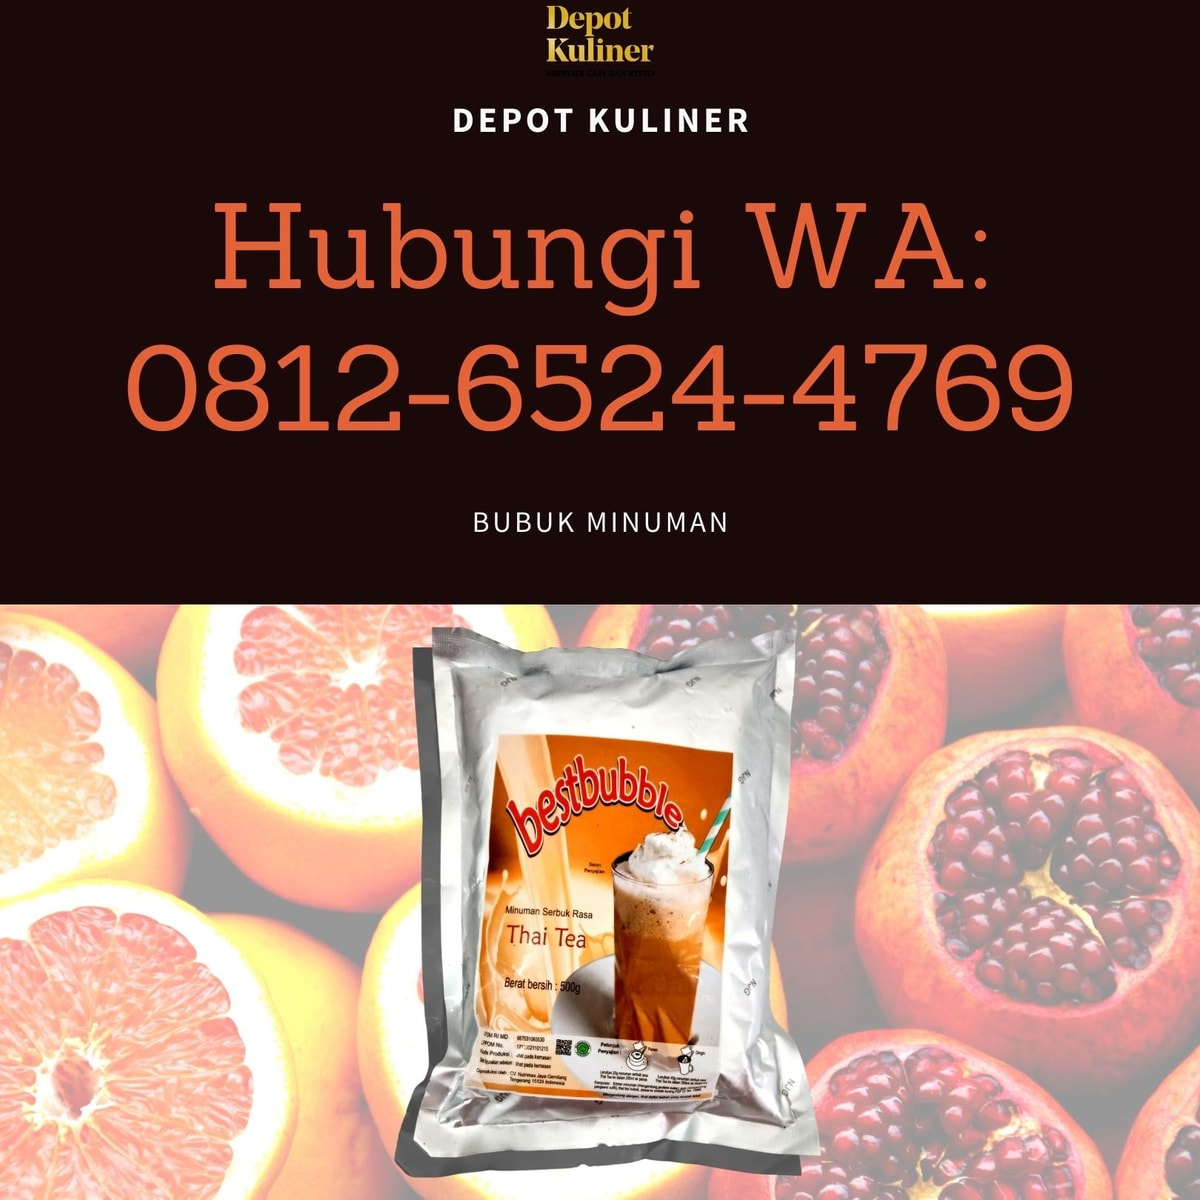 DISTRIBUTOR LANGSUNG, Call 0812-6524-4769, Bubuk Minuman Premium Tanpa Gula